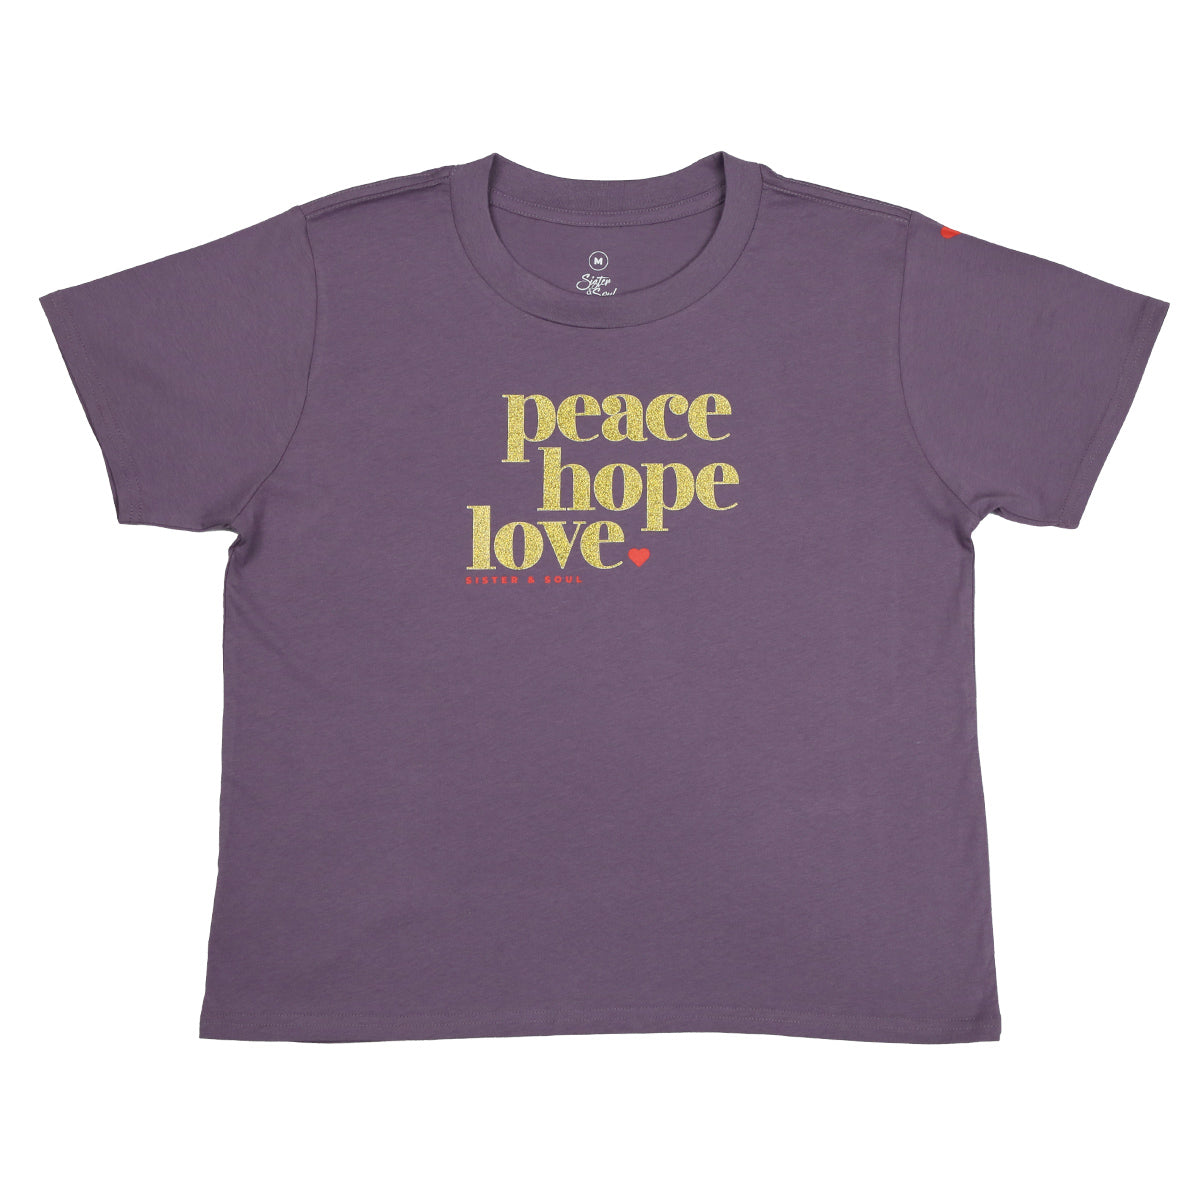 PEACE HOPE LOVE - Dusty Purple Cropped Wide Boxy Tee - Gold Glitter Print